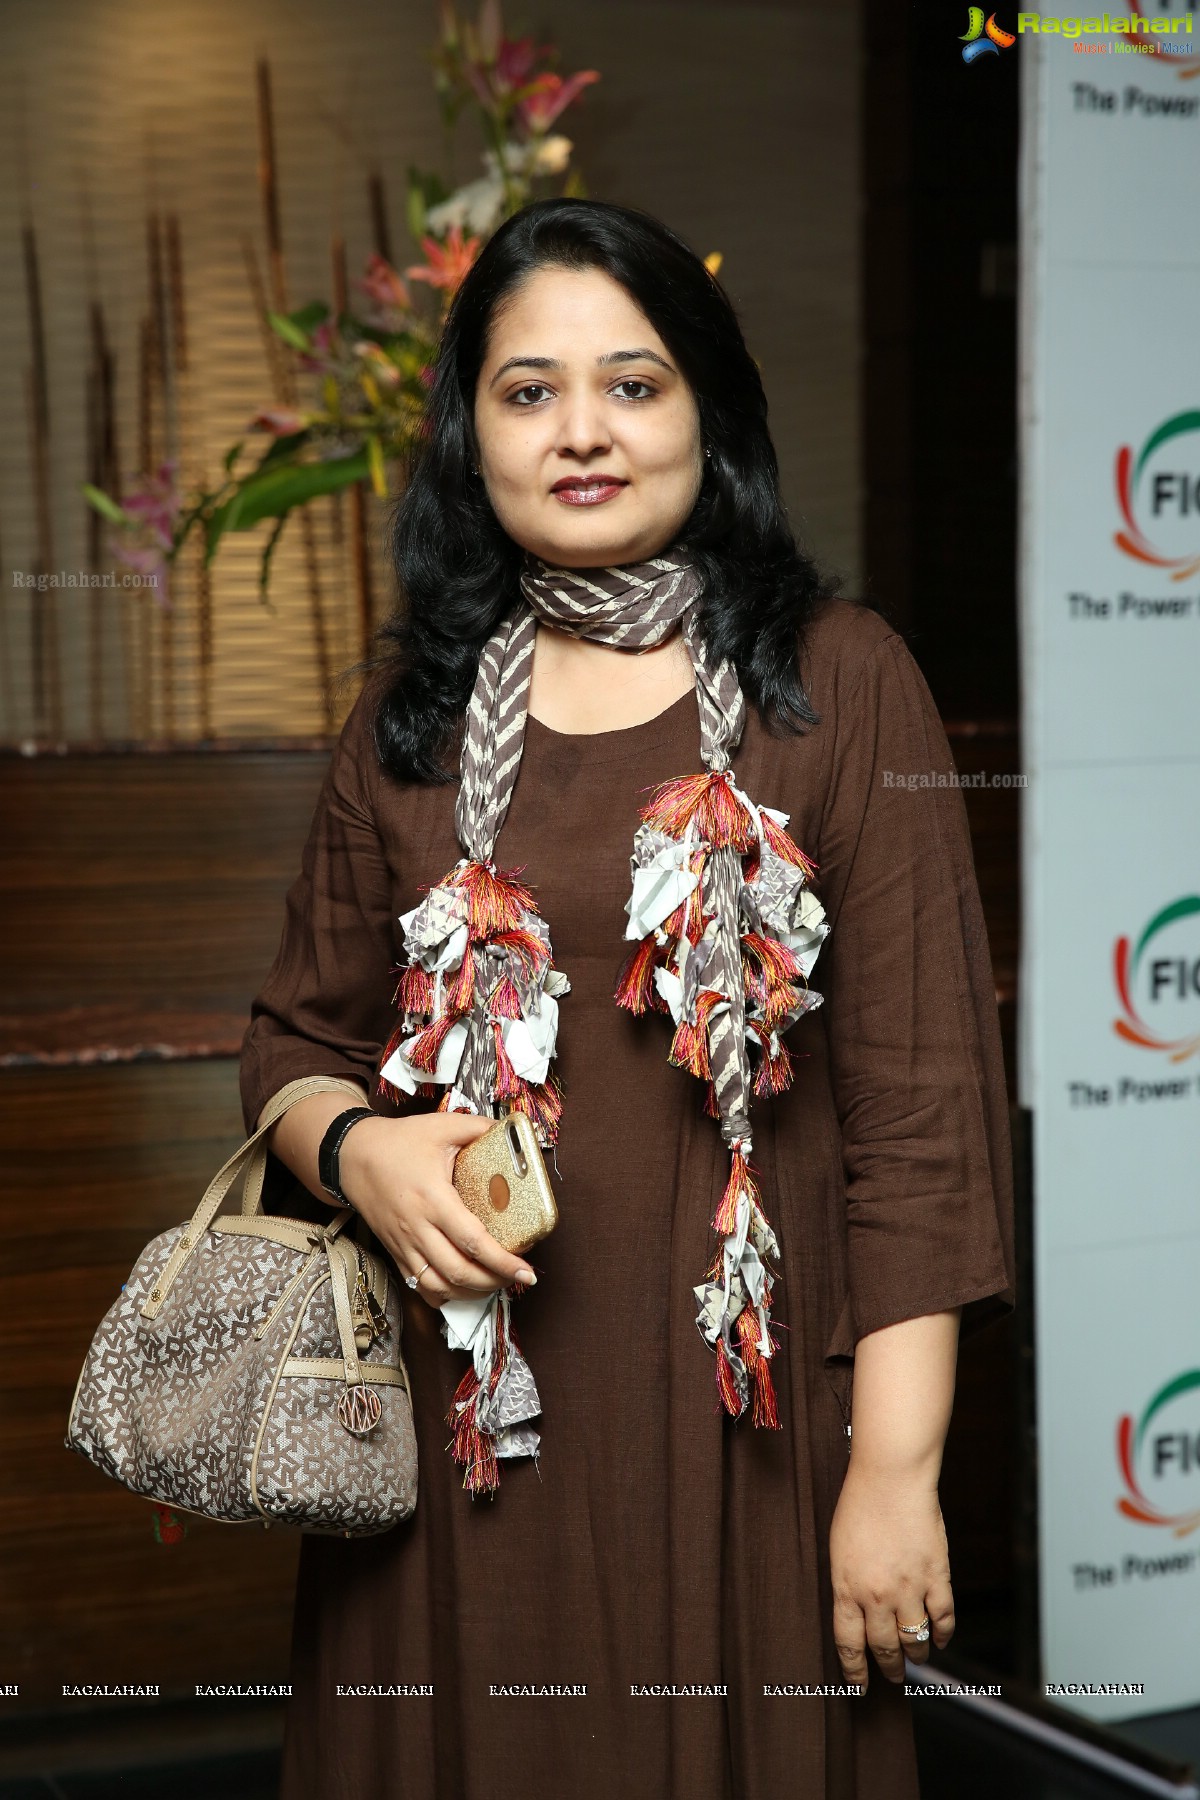 FICCI FLO Press Meet at The Park Hotel, Somajiguda, Hyderabad